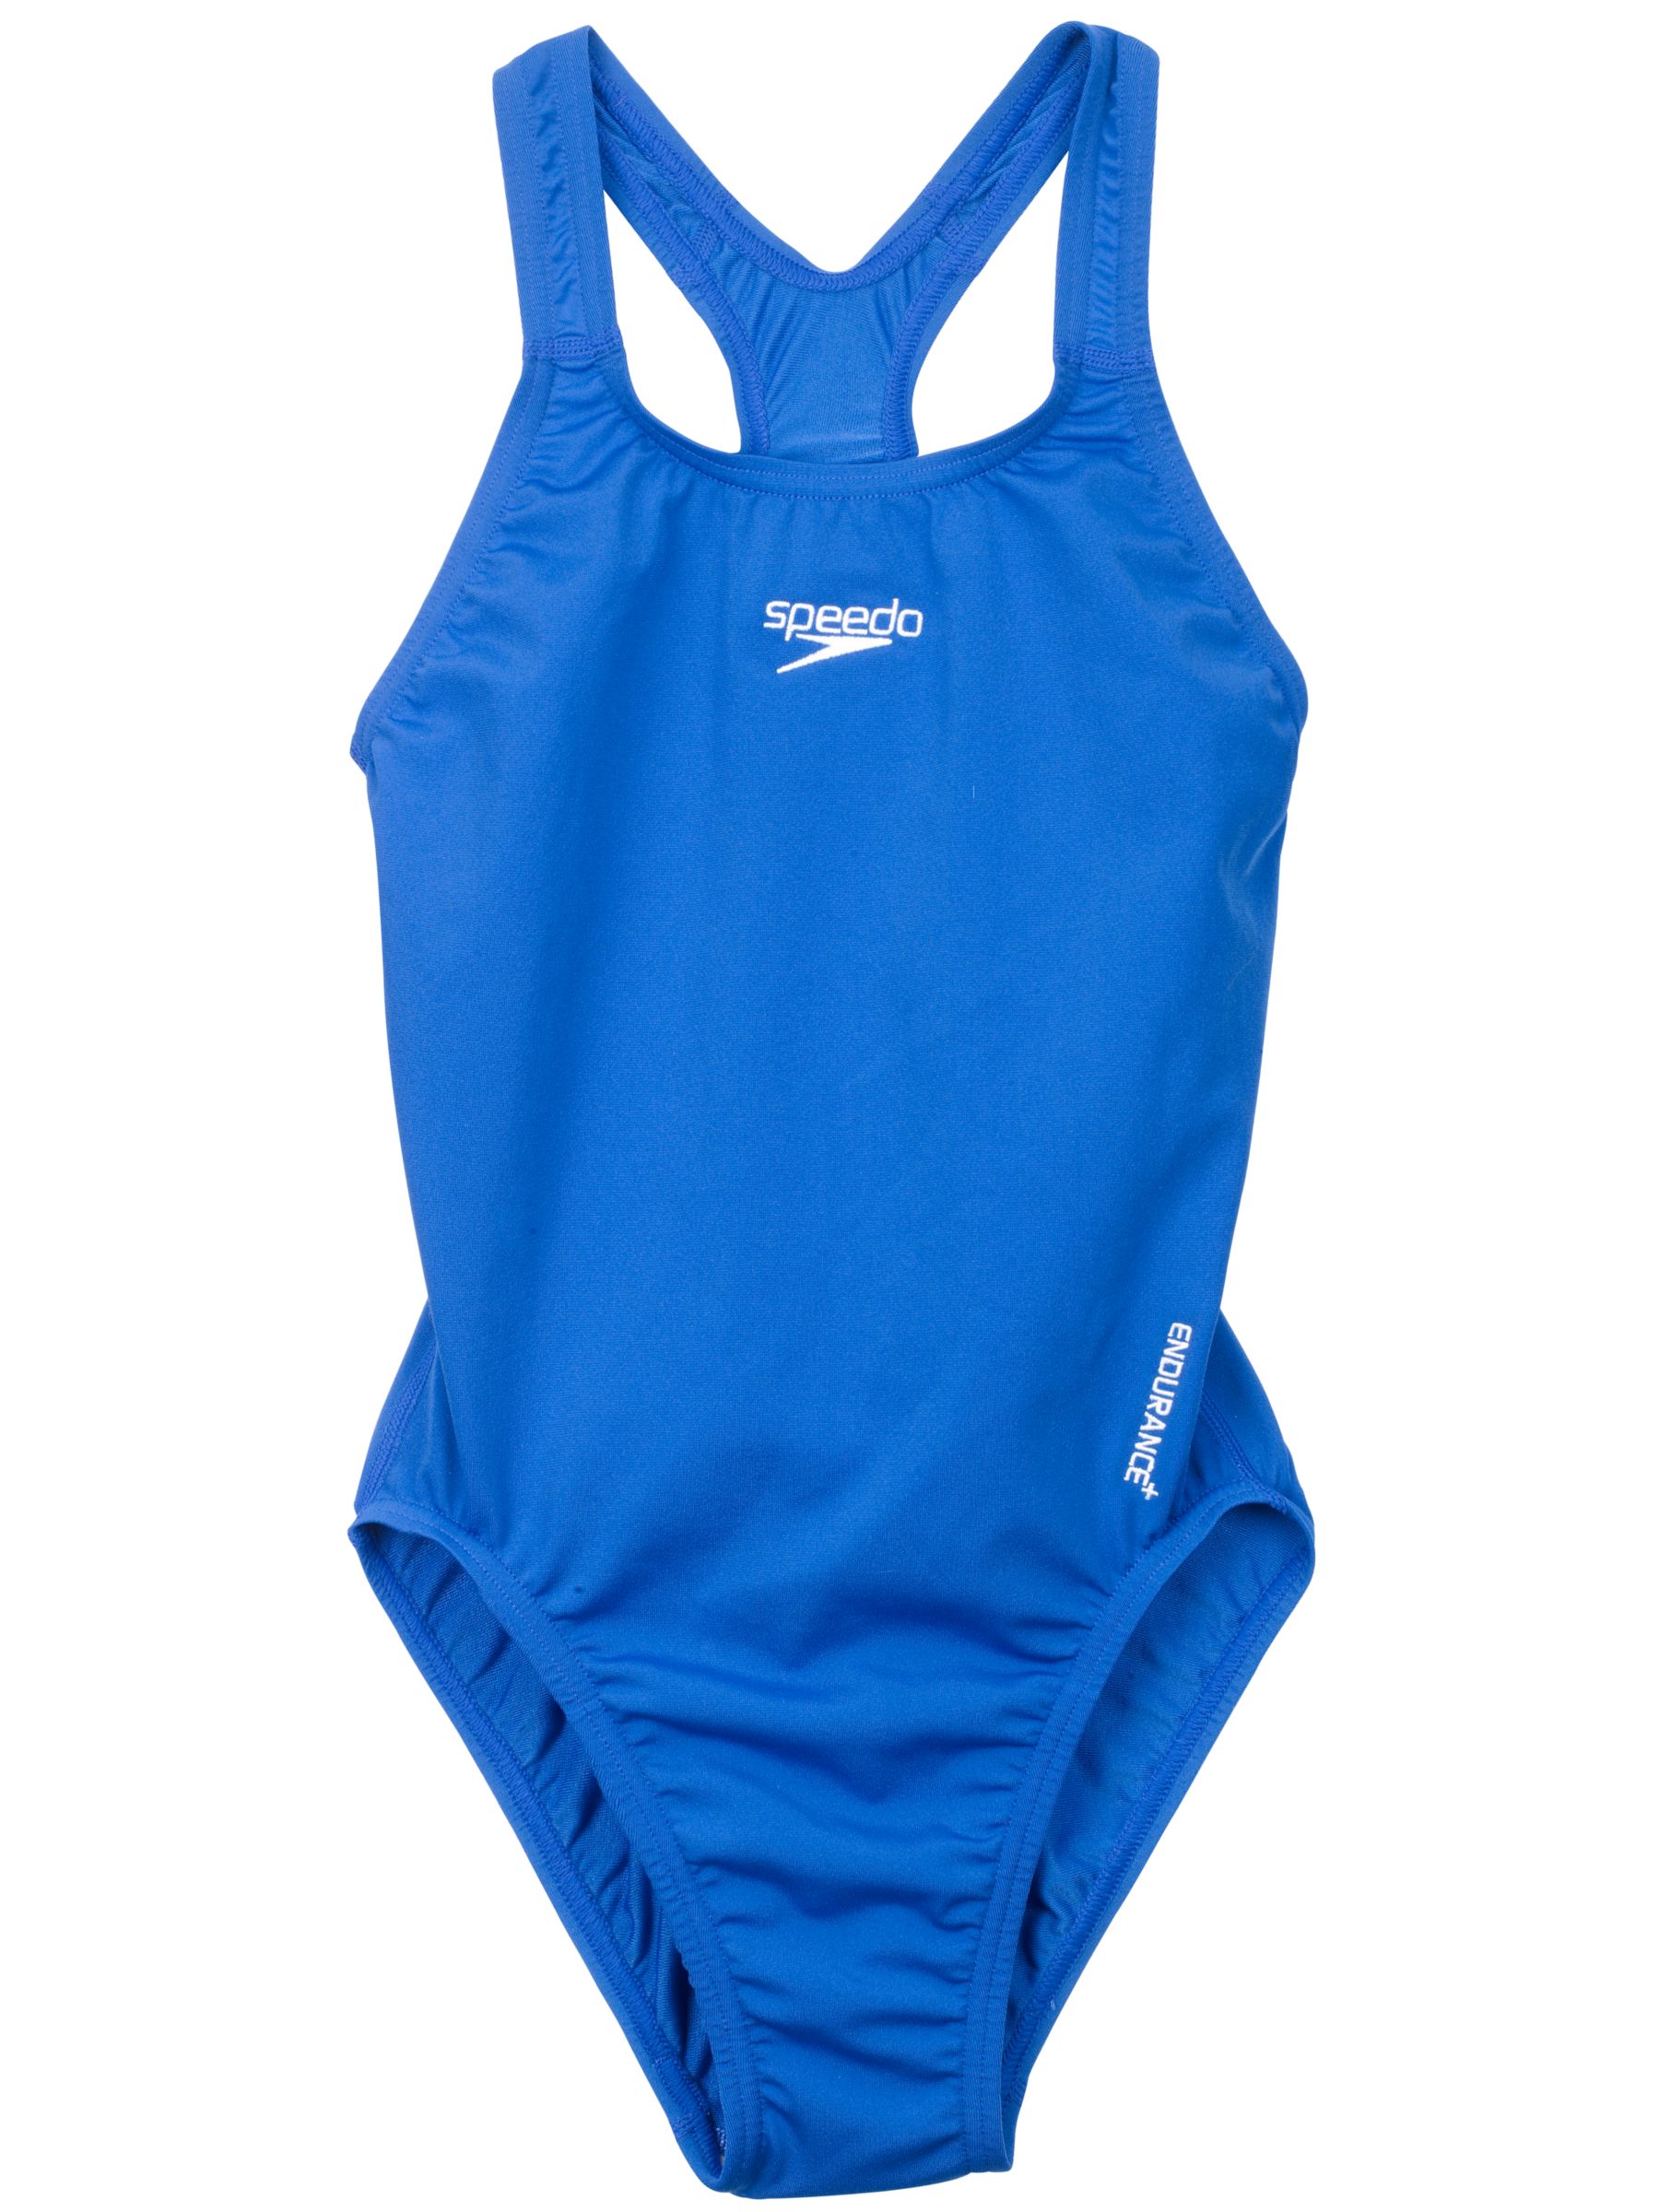 Speedo Girls' Medalist Swimsuit, Royal Blue at John Lewis